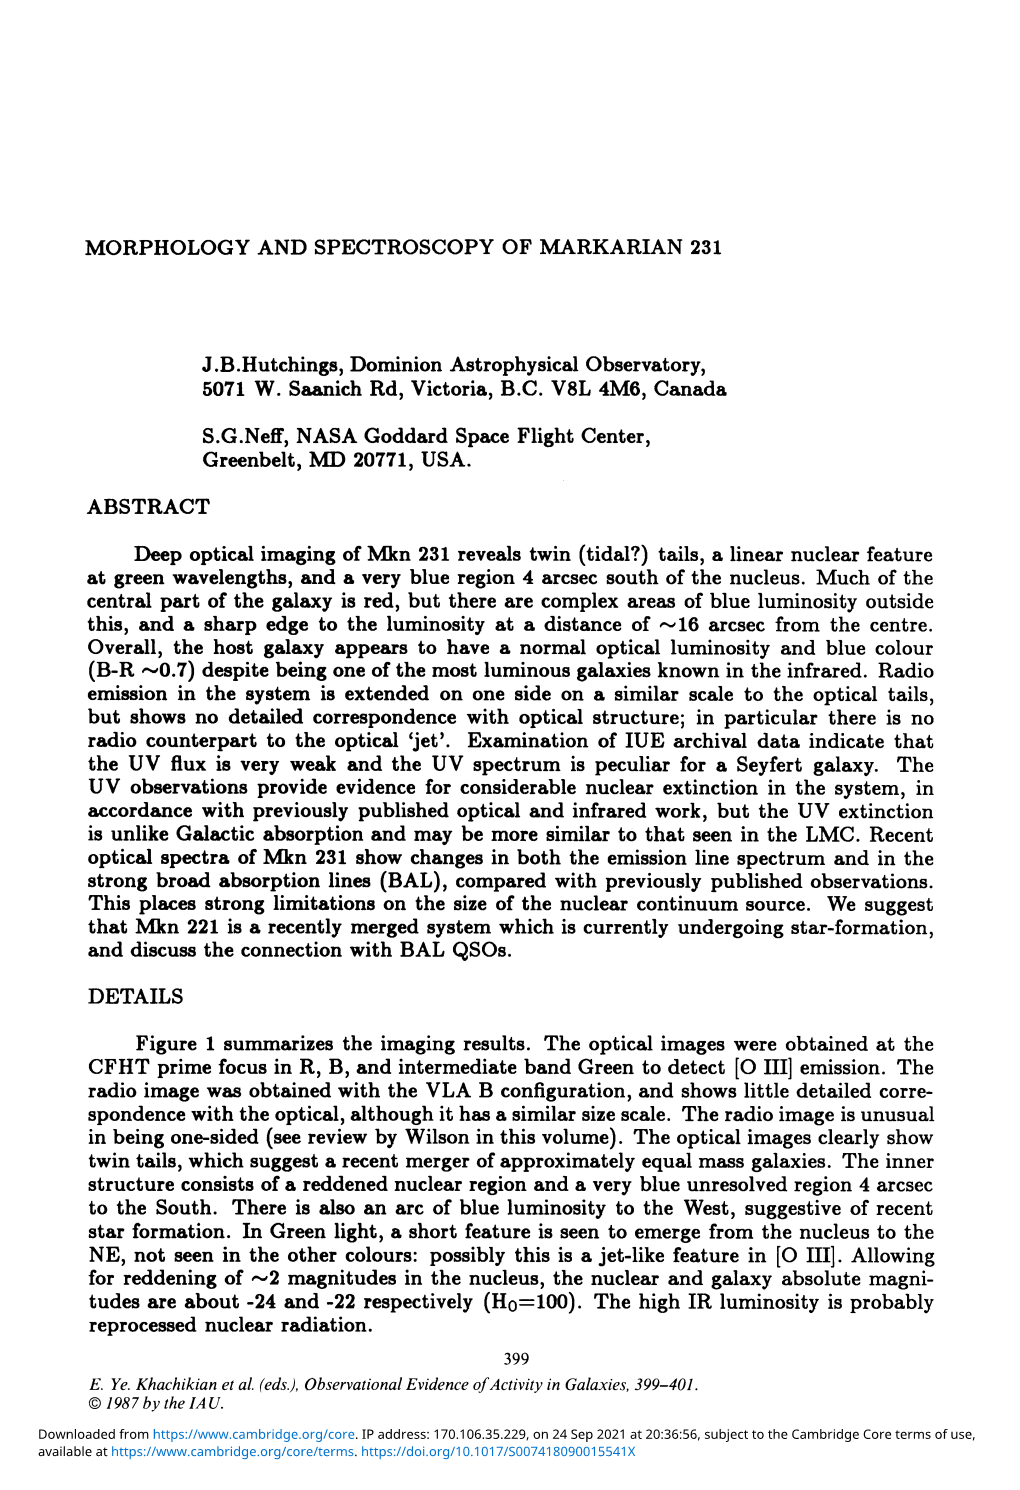 Morphology and Spectroscopy of Markarian 231